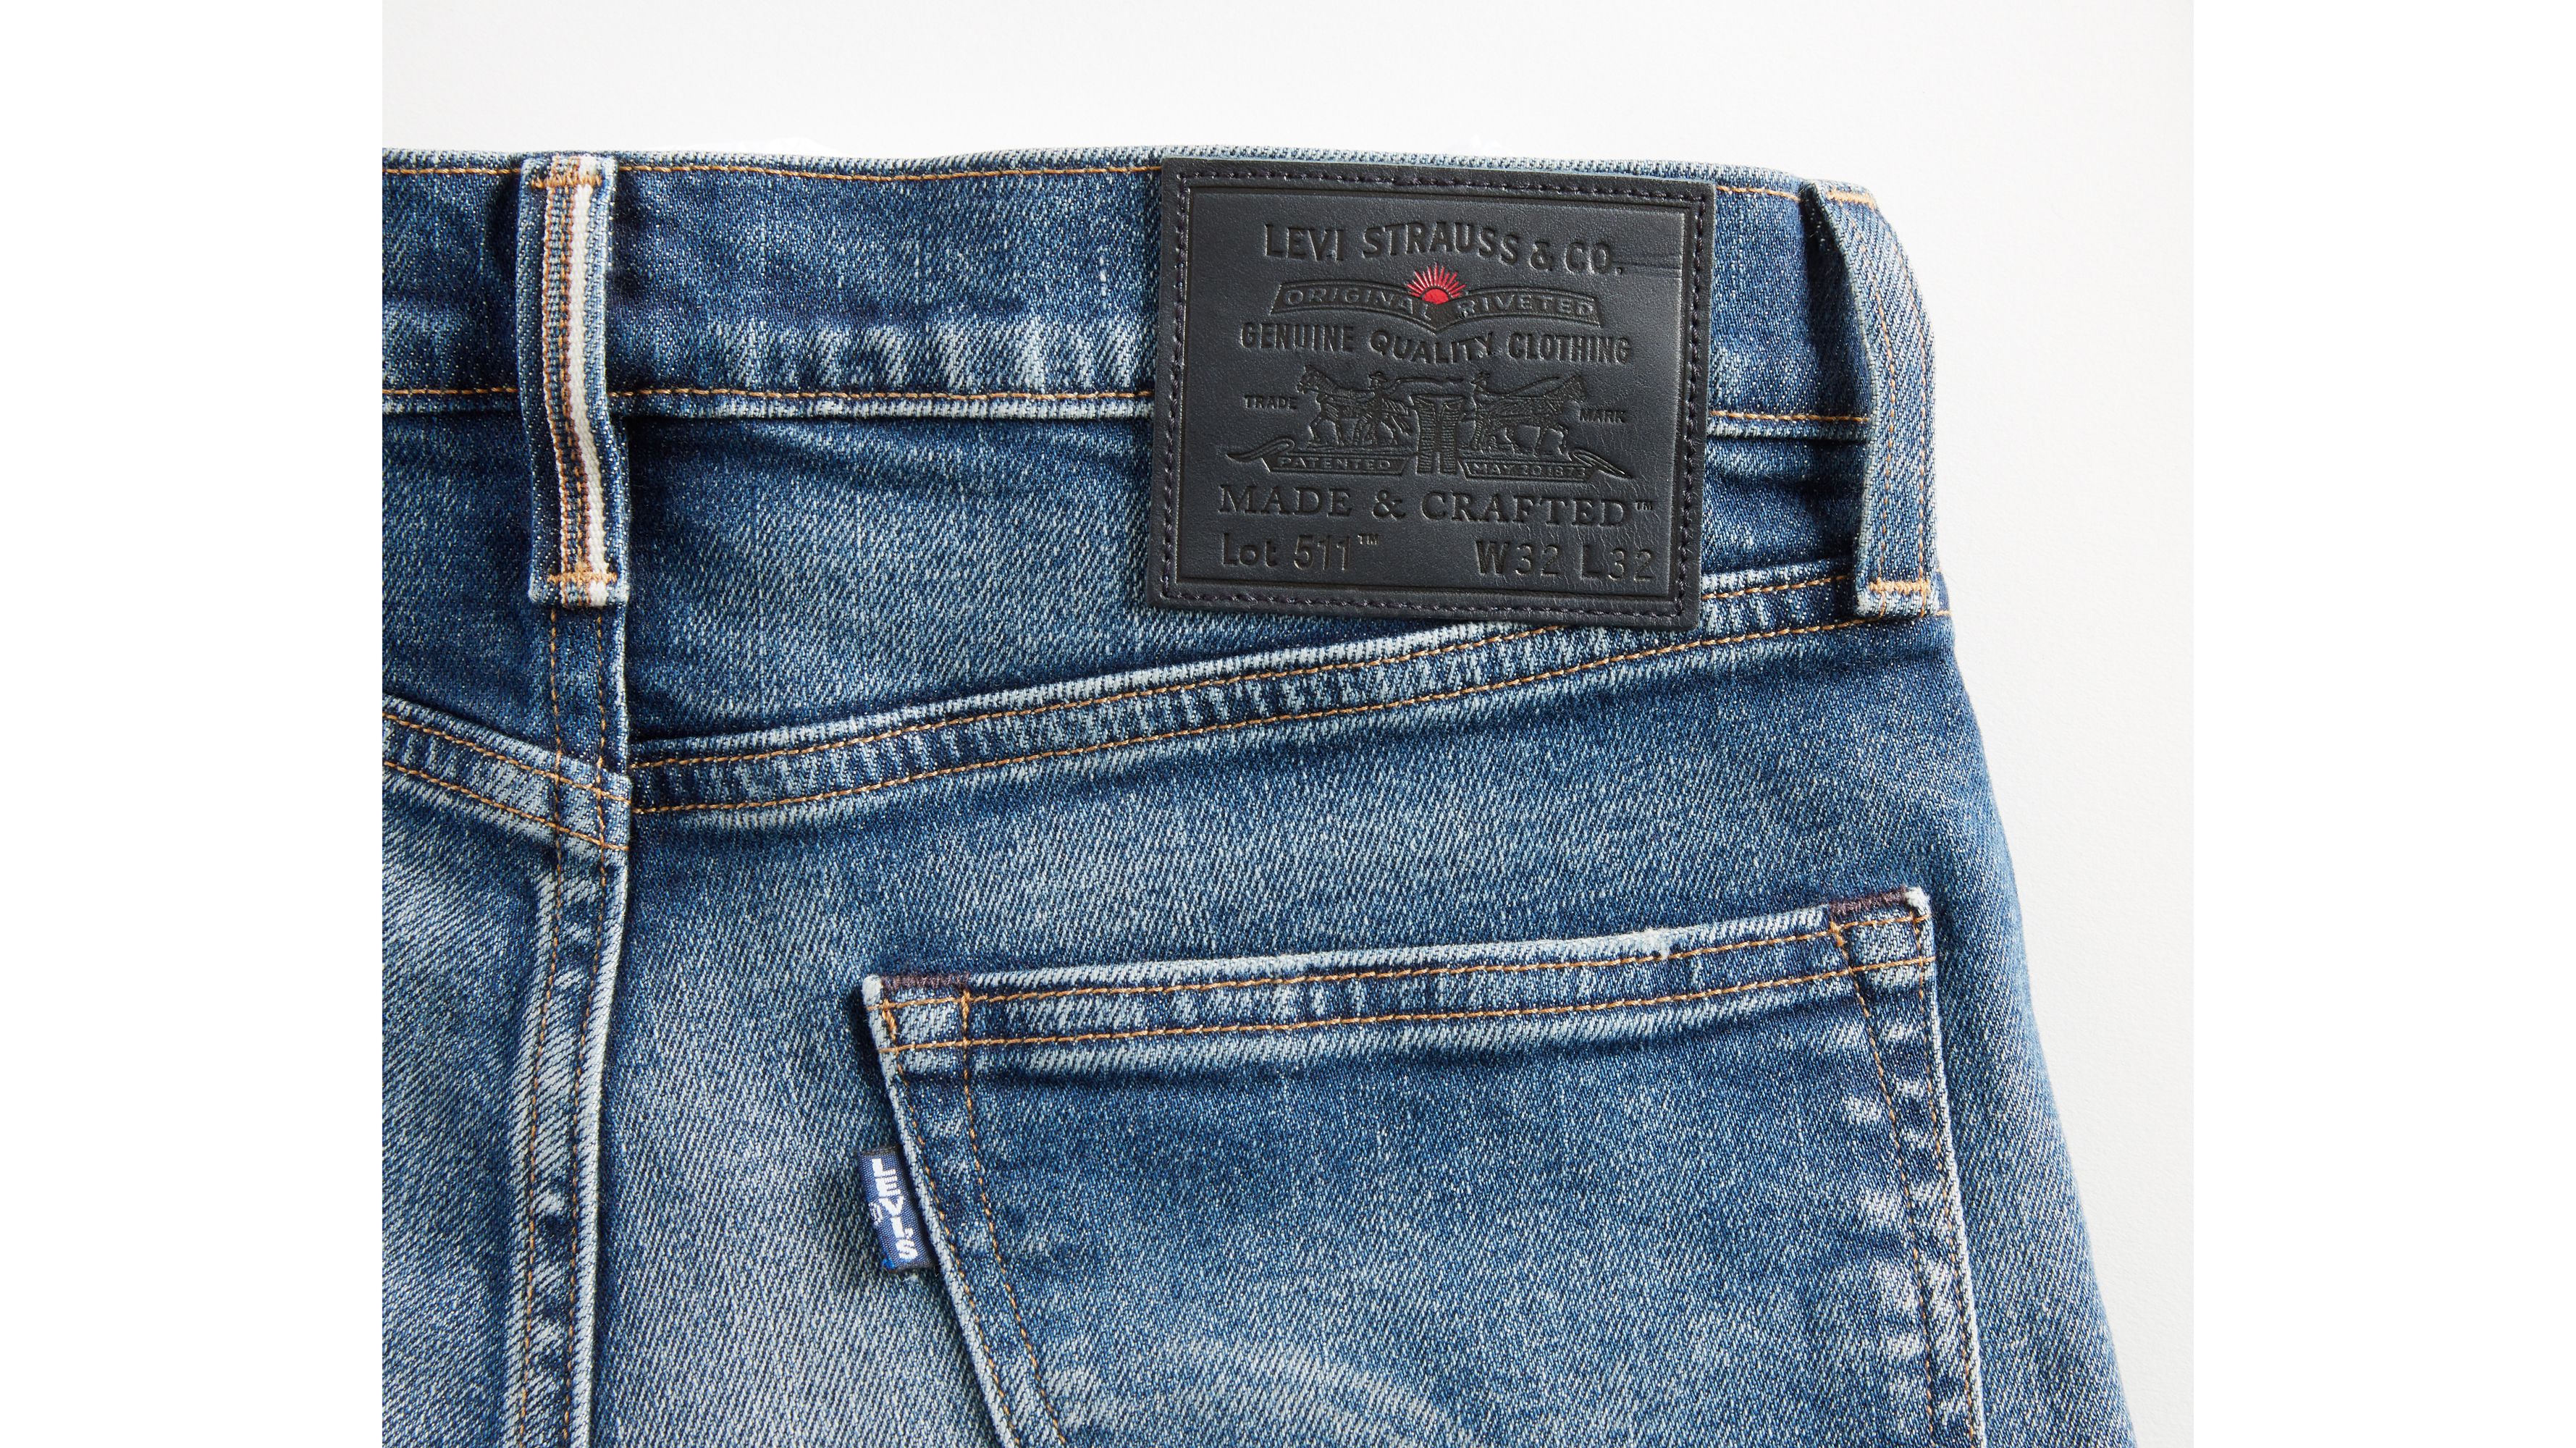 Made in Japan 511™ Slim Fit Selvedge Men's Jeans